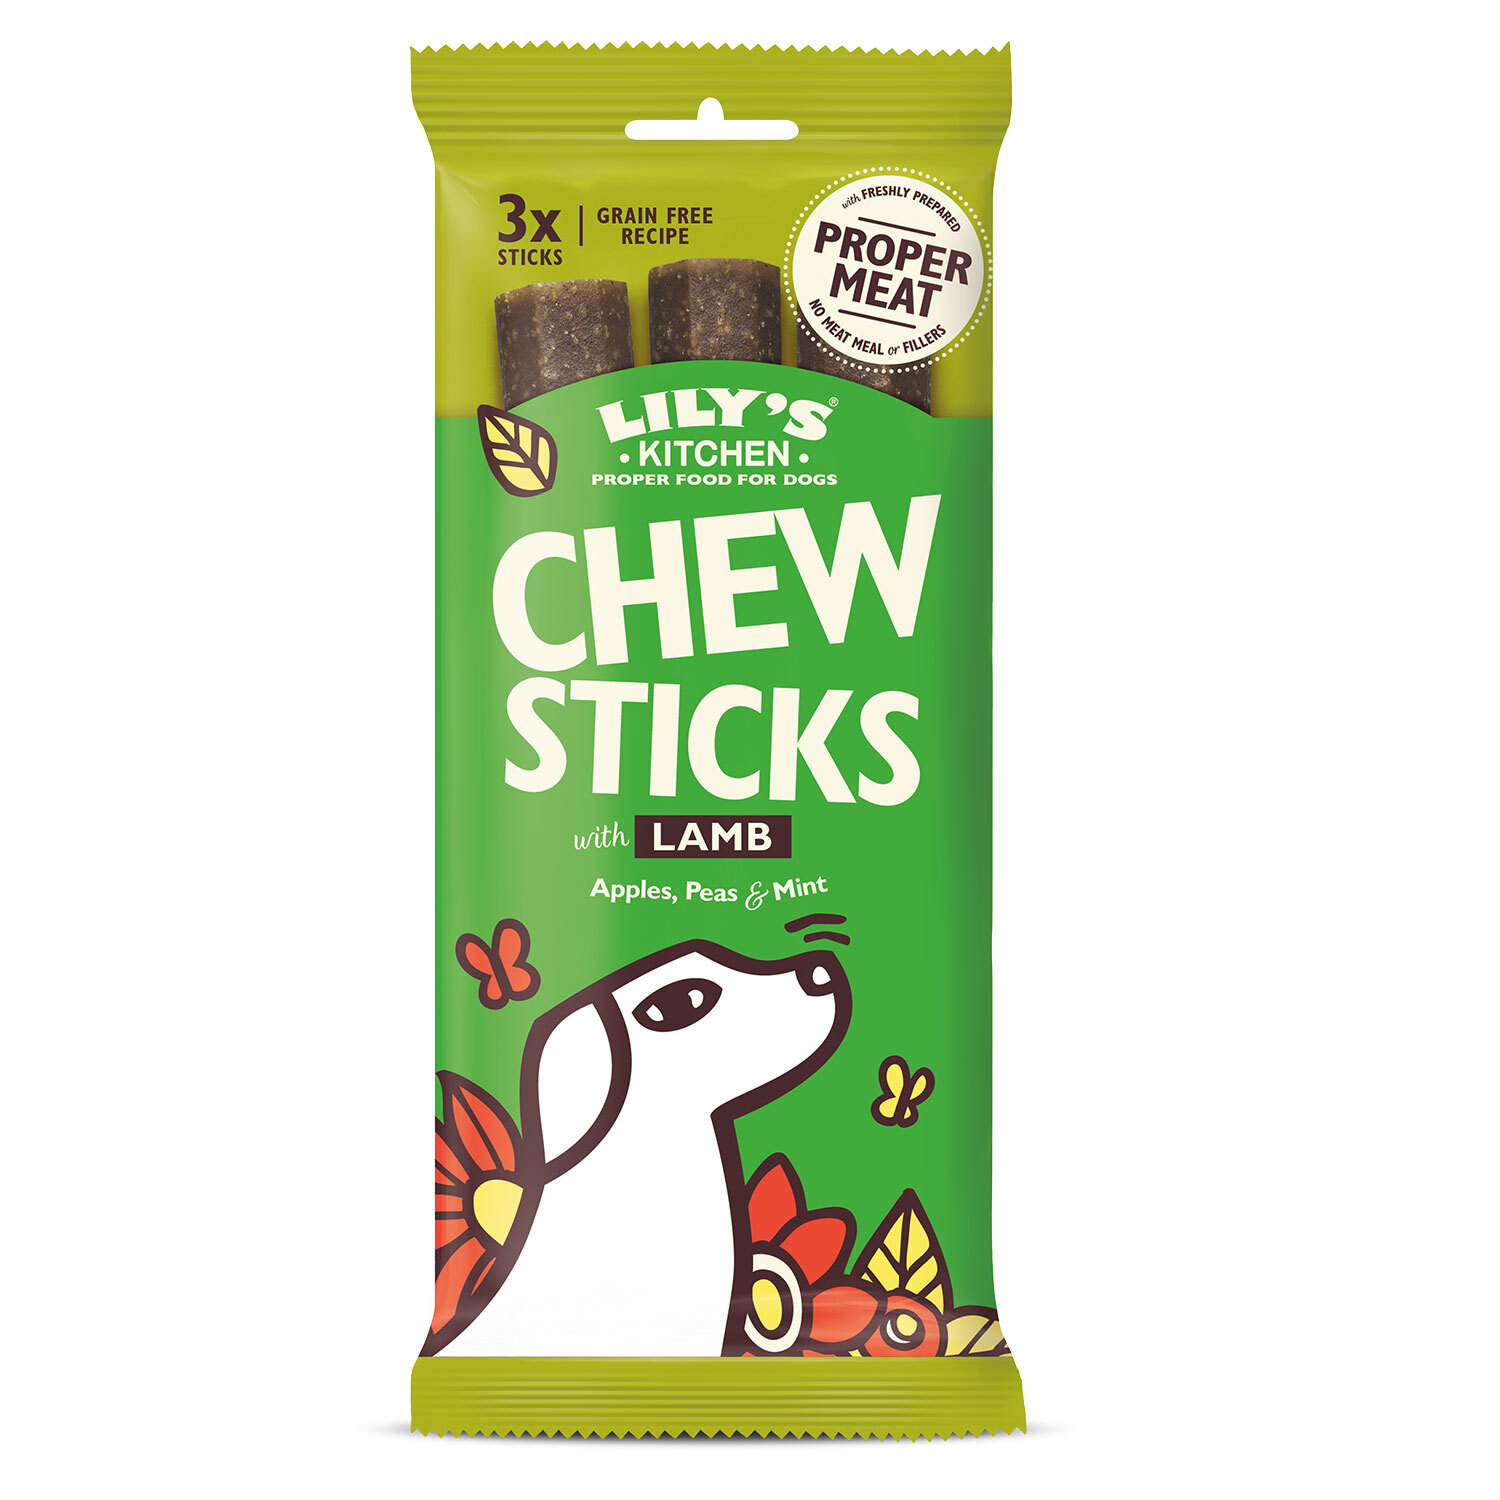 Lilys Kitchen Chew Sticks - Lamb Image